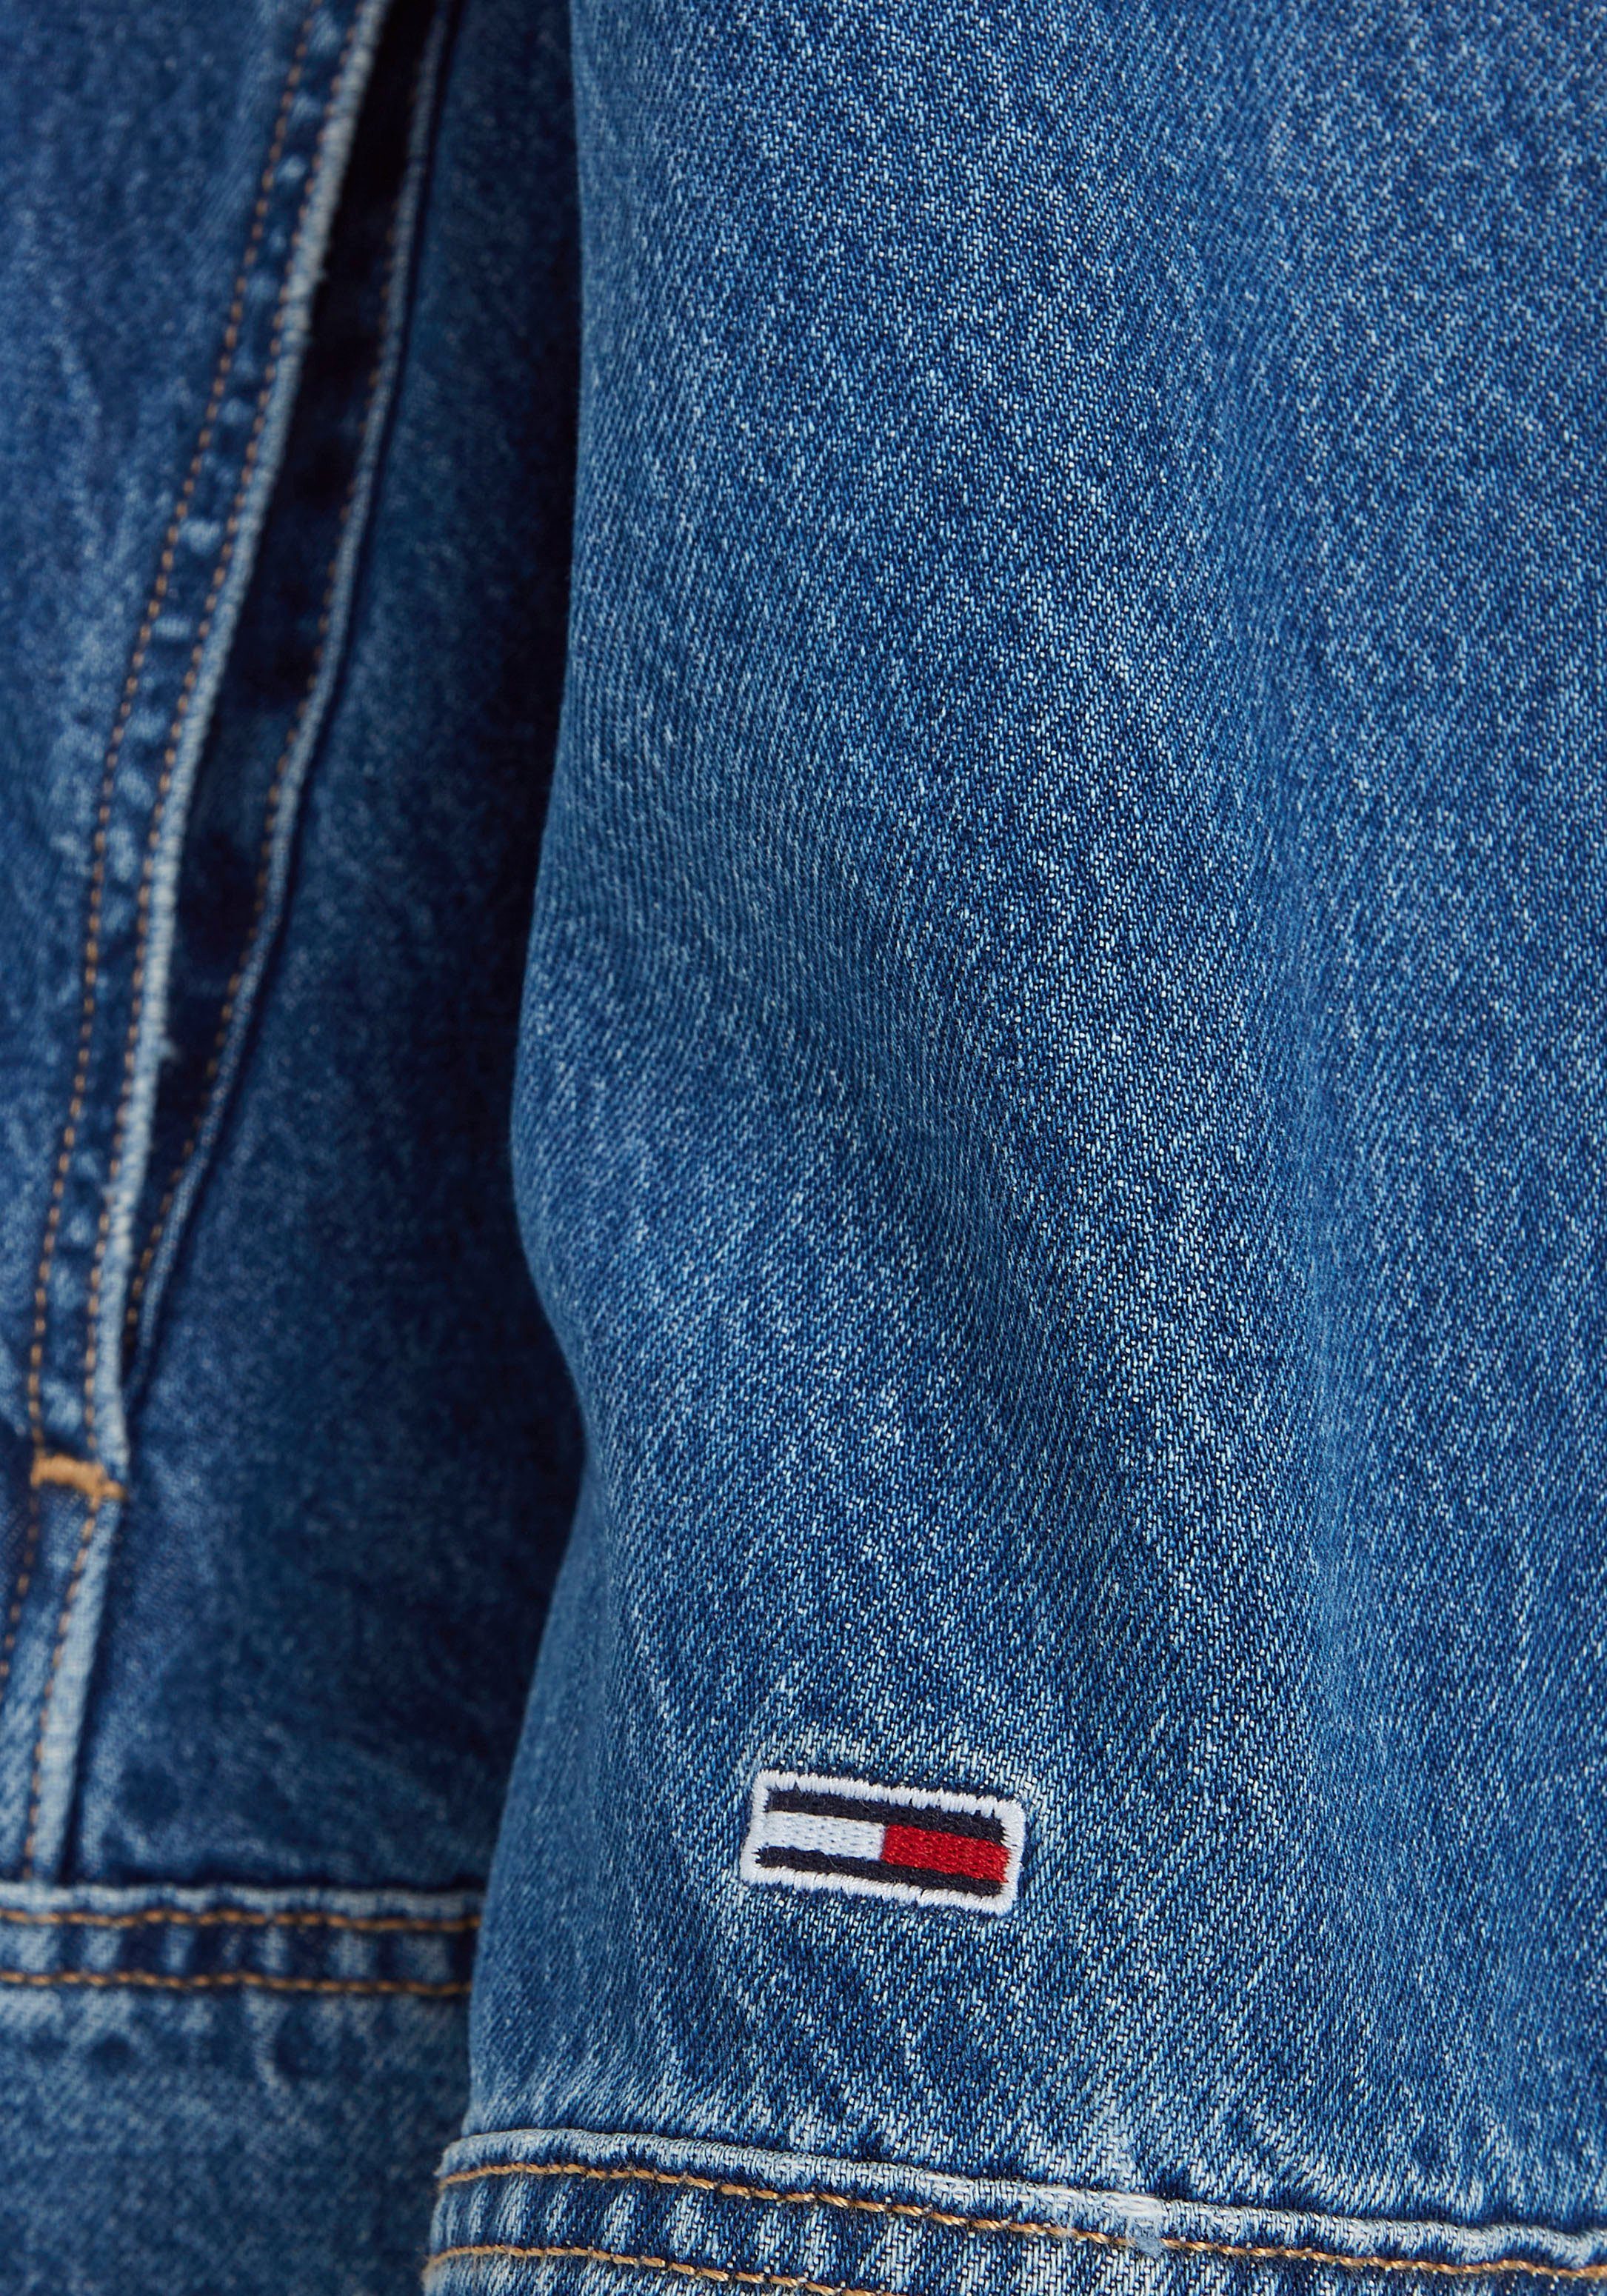 Jeansjacke PLUS DNM mit BG0032 OVERSIZE Knopfverschluss Jeans Tommy JKT Plus